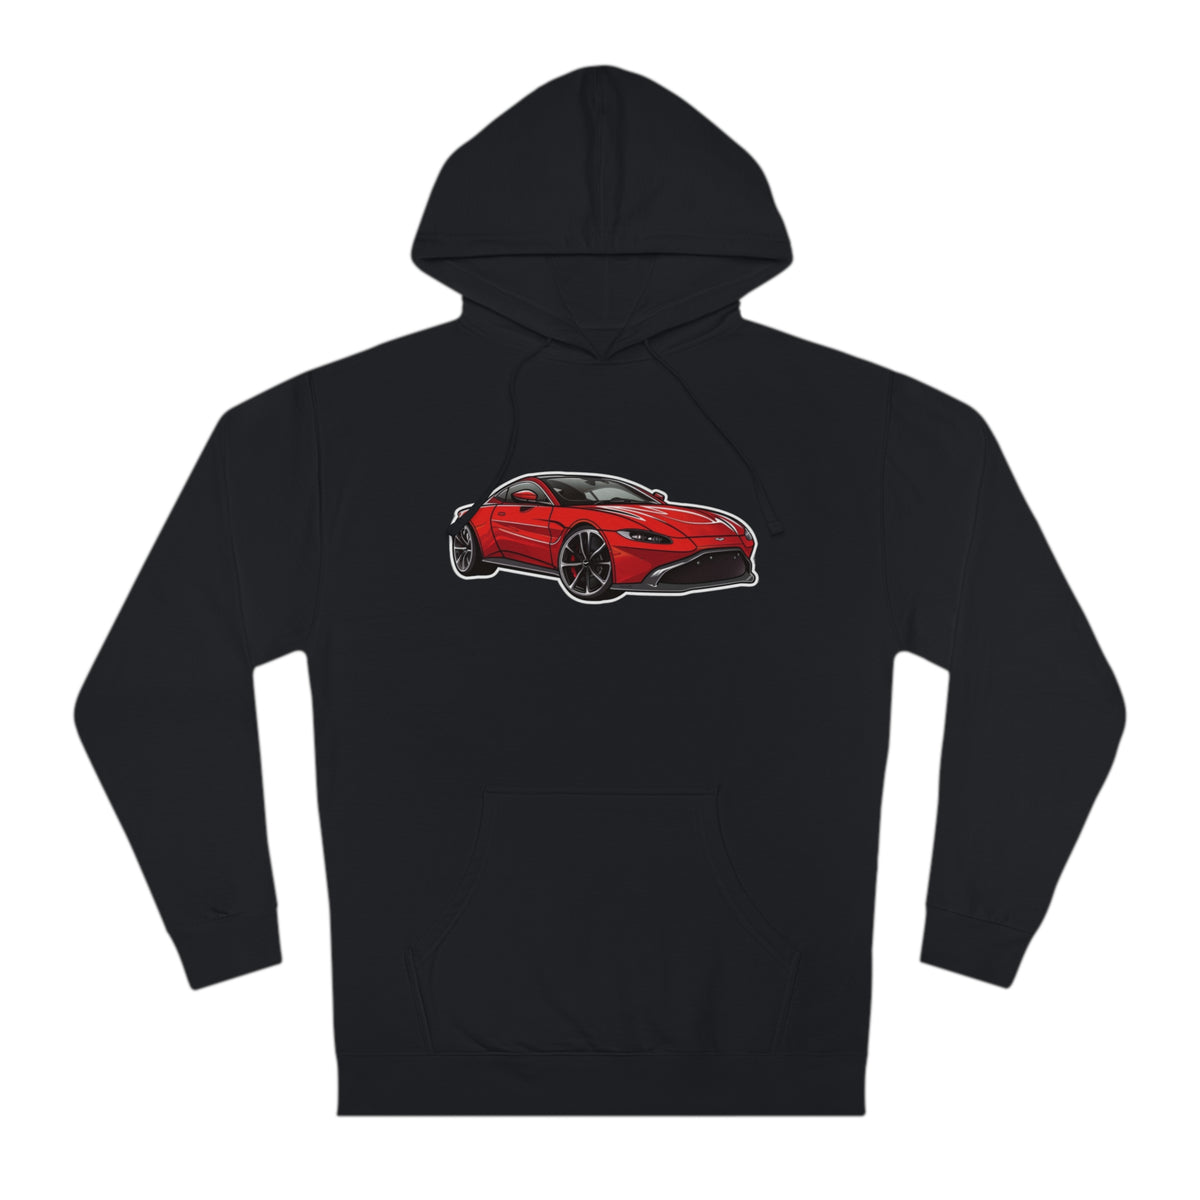 Velocity Red Aston Martin Men's Hoodie: Style in the Fast Lane Hooded Sweatshirt